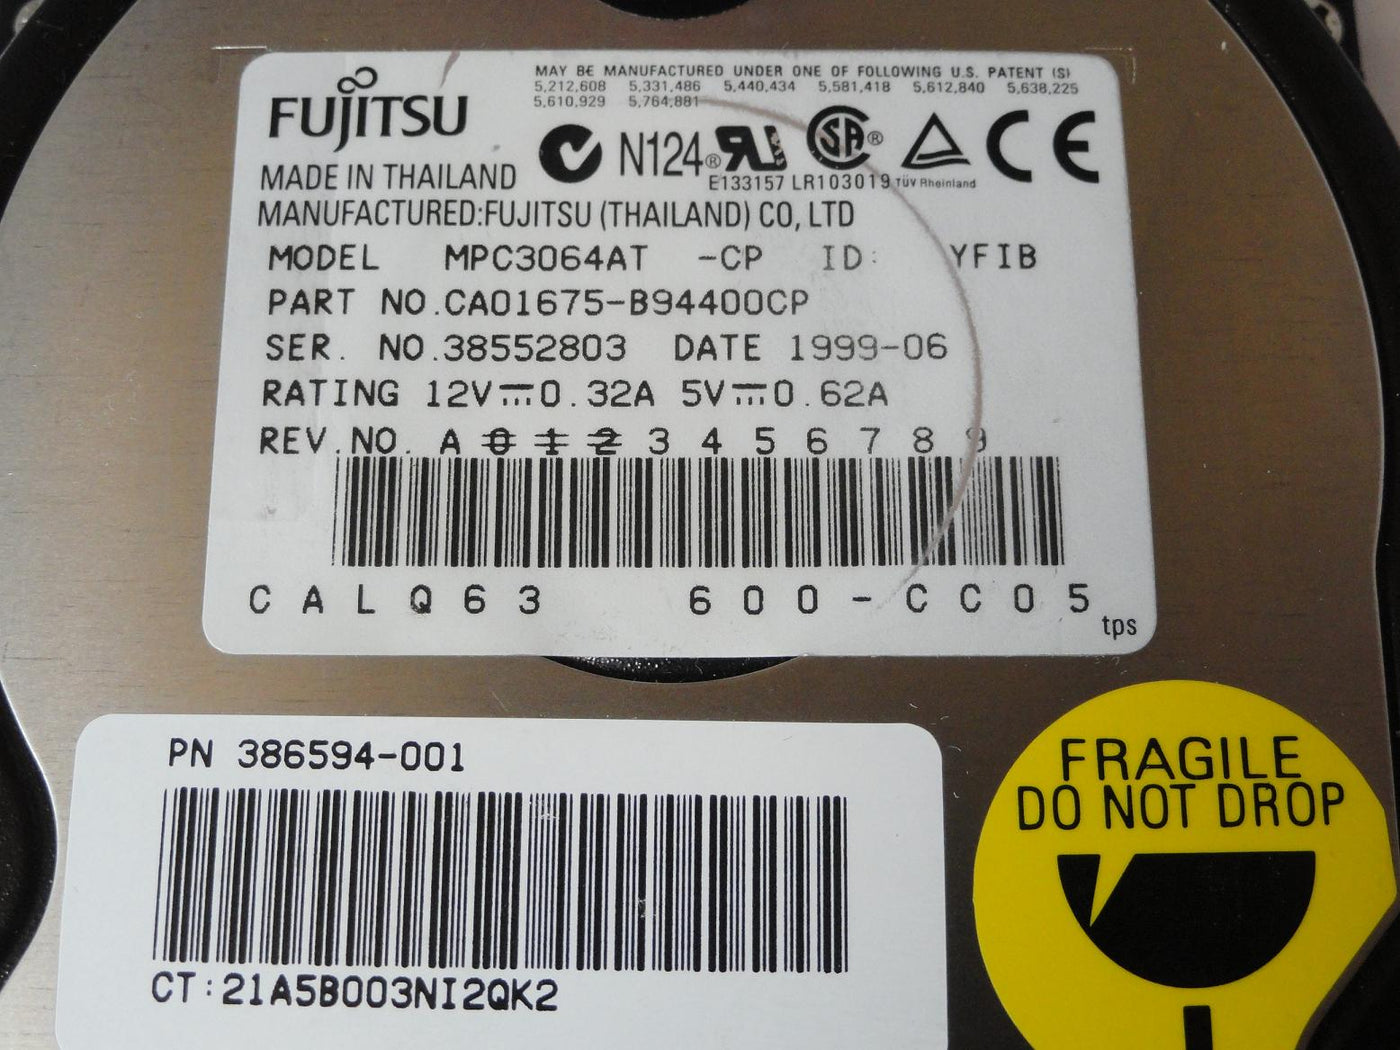 PR19587_CA01675-B94400CP_Fujitsu HP 6.4GB IDE 5400rpm HDD - Image3